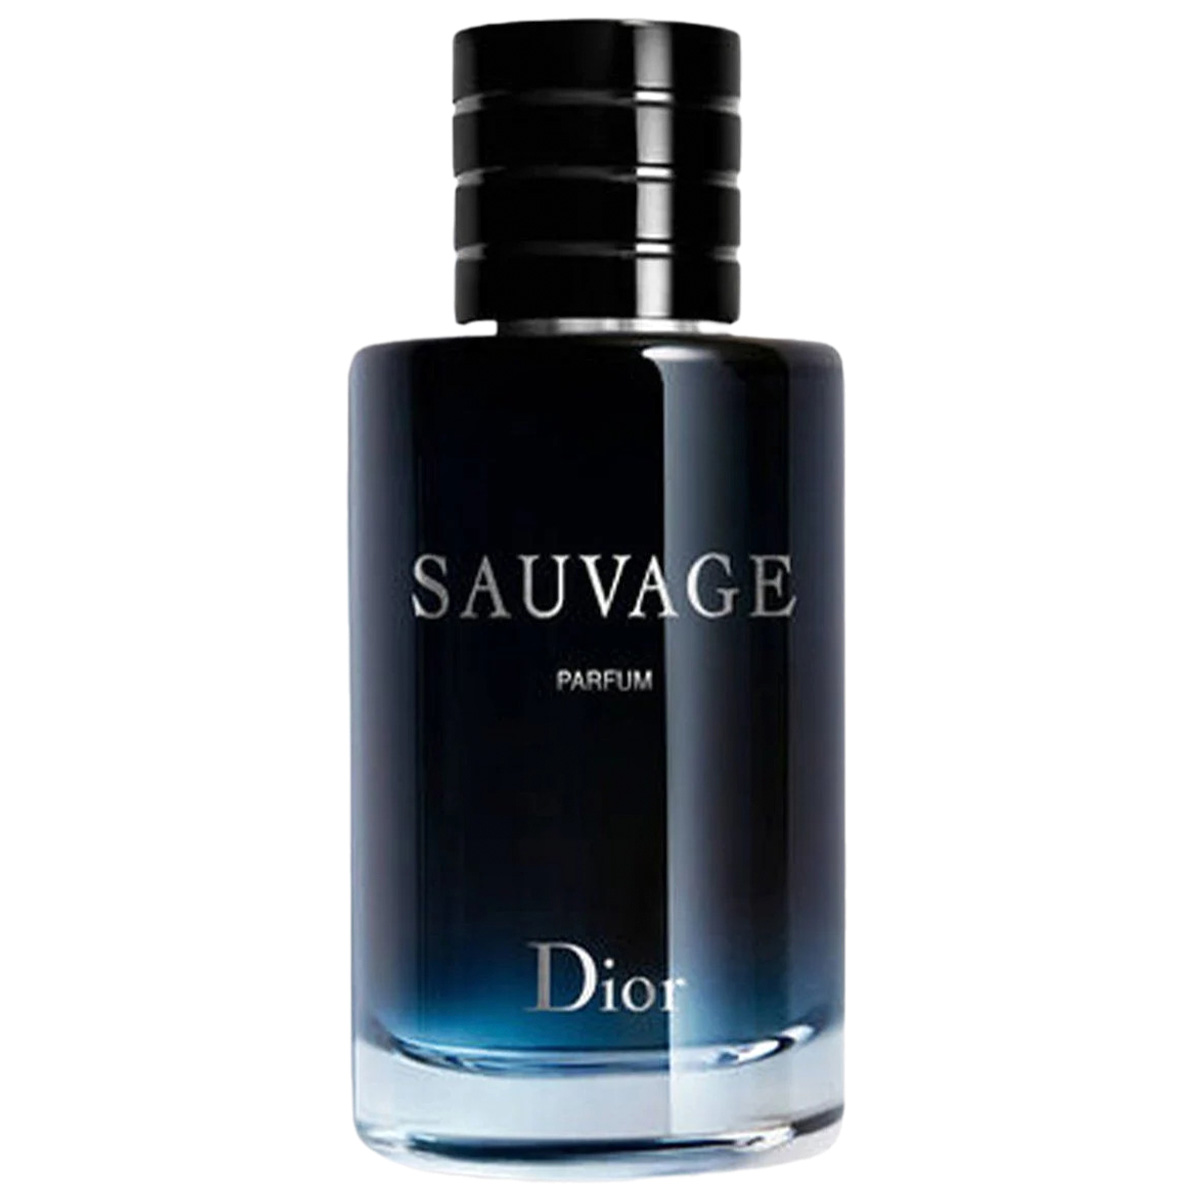 Dior Sauvage Parfum Tester